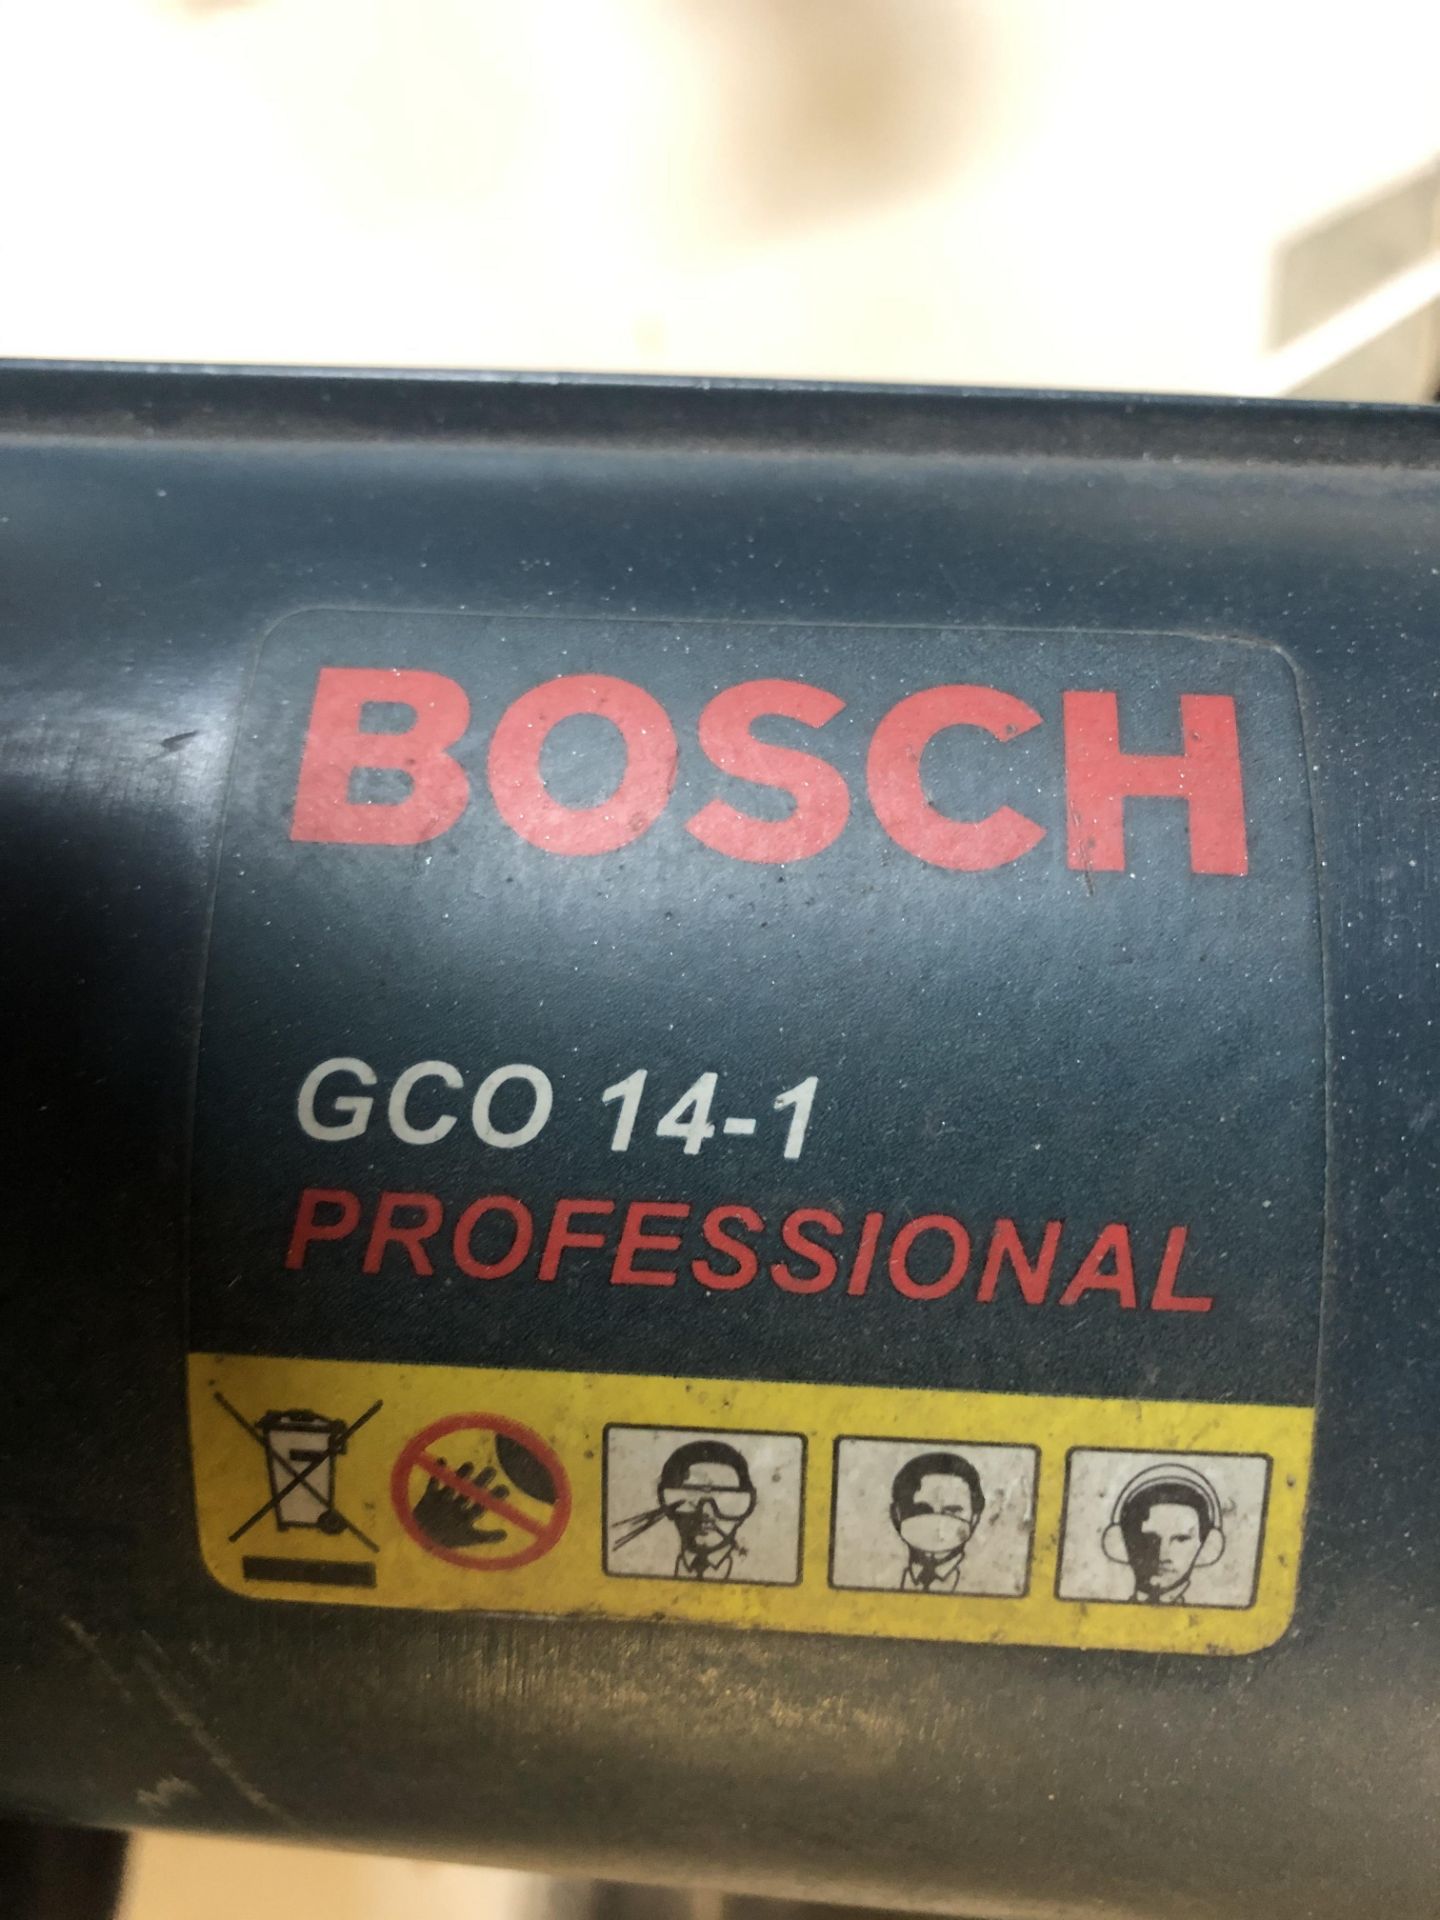 Bosch GCO 14-1 Portable Cut-Off Saw - Image 4 of 4